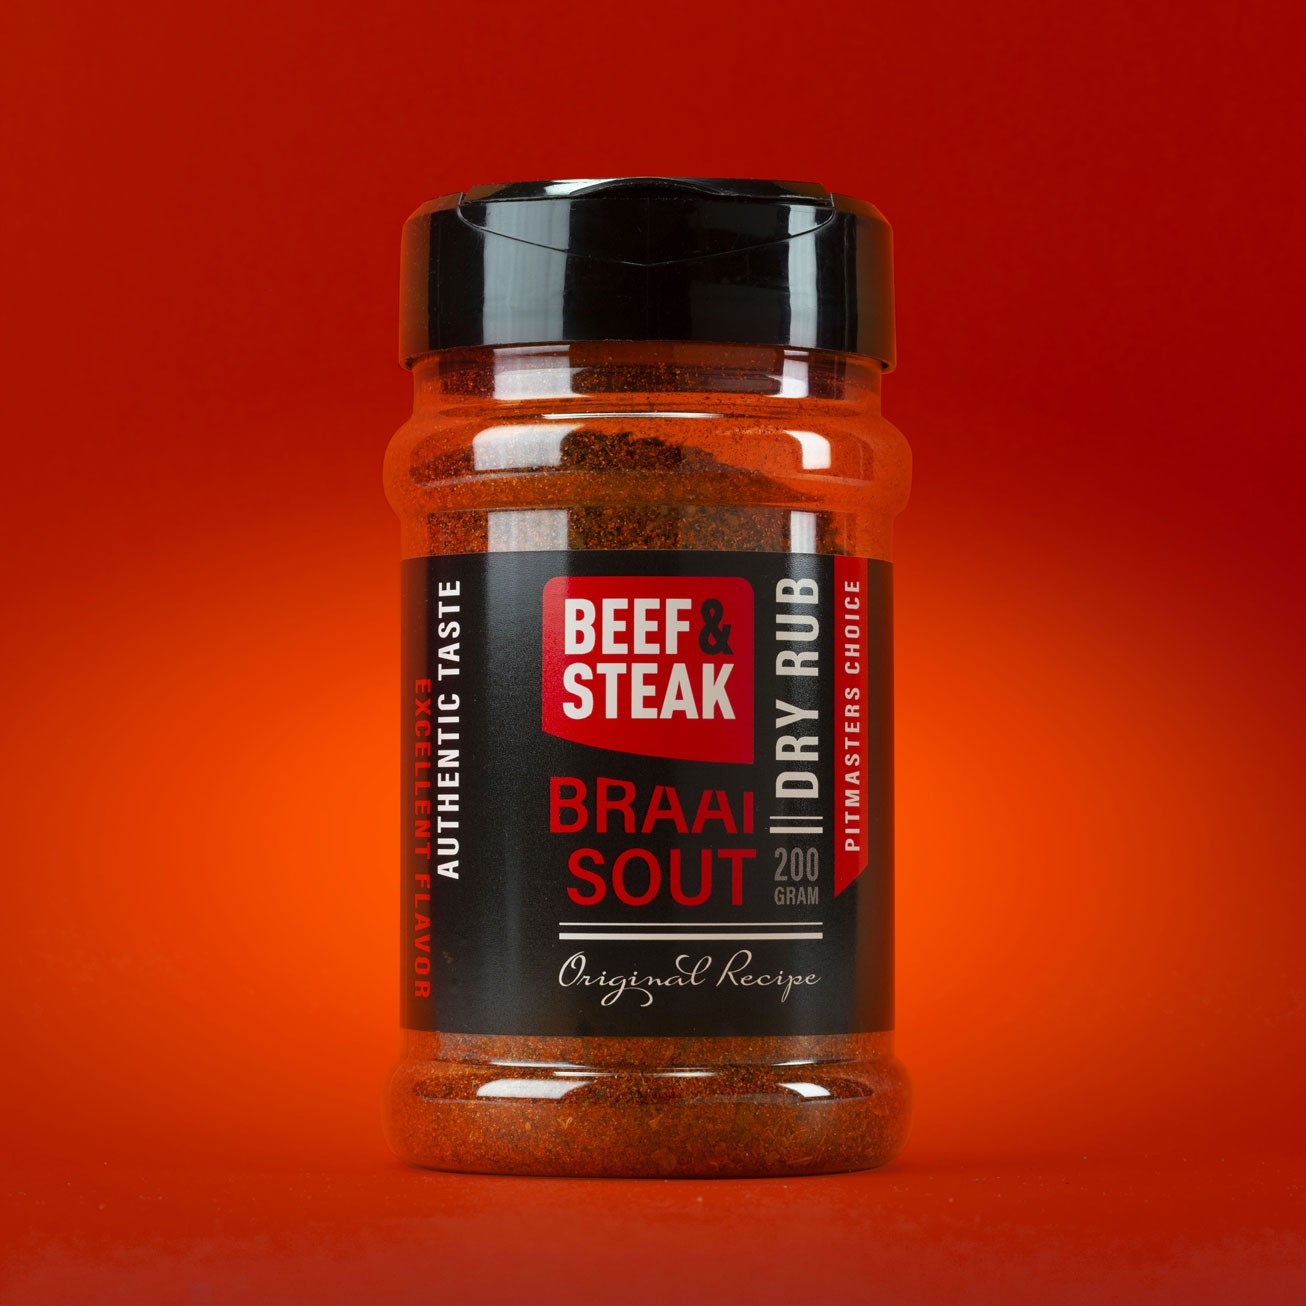 Beef & Steak Condiments Packaging Design by Van Heertum Design VHD